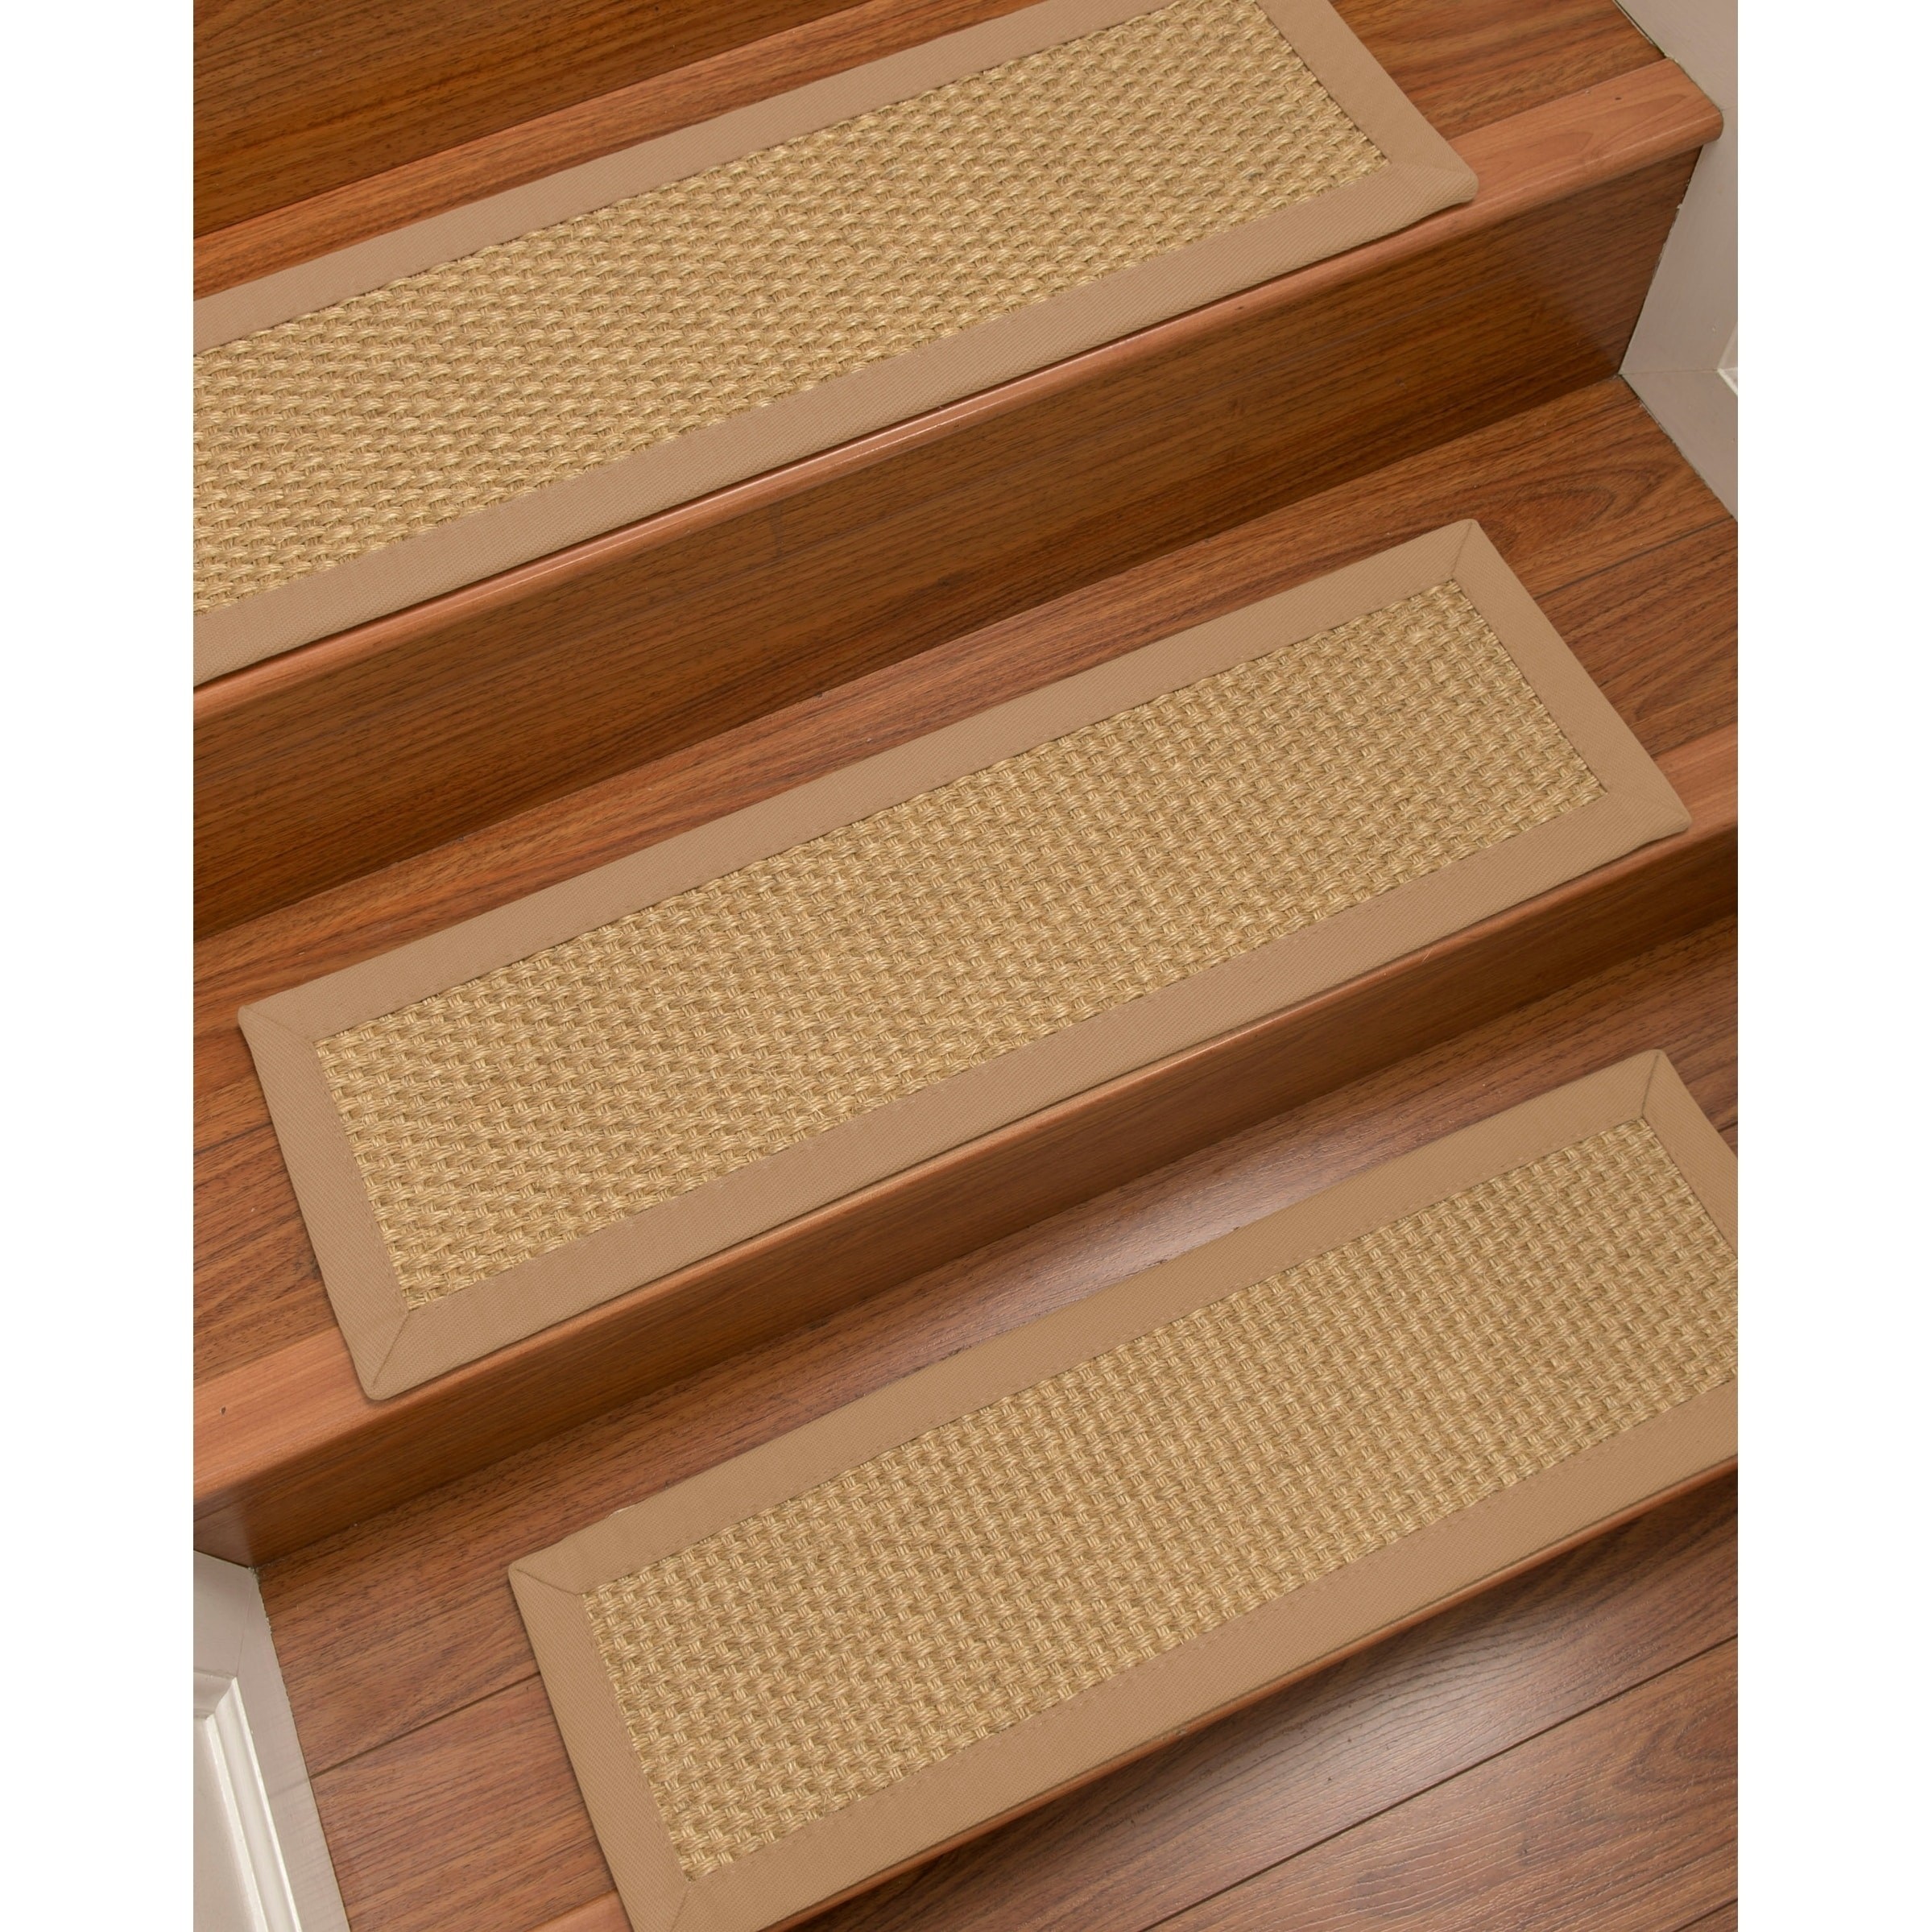 Naturalarearugs handcrafted rio sisal carpet stair treads